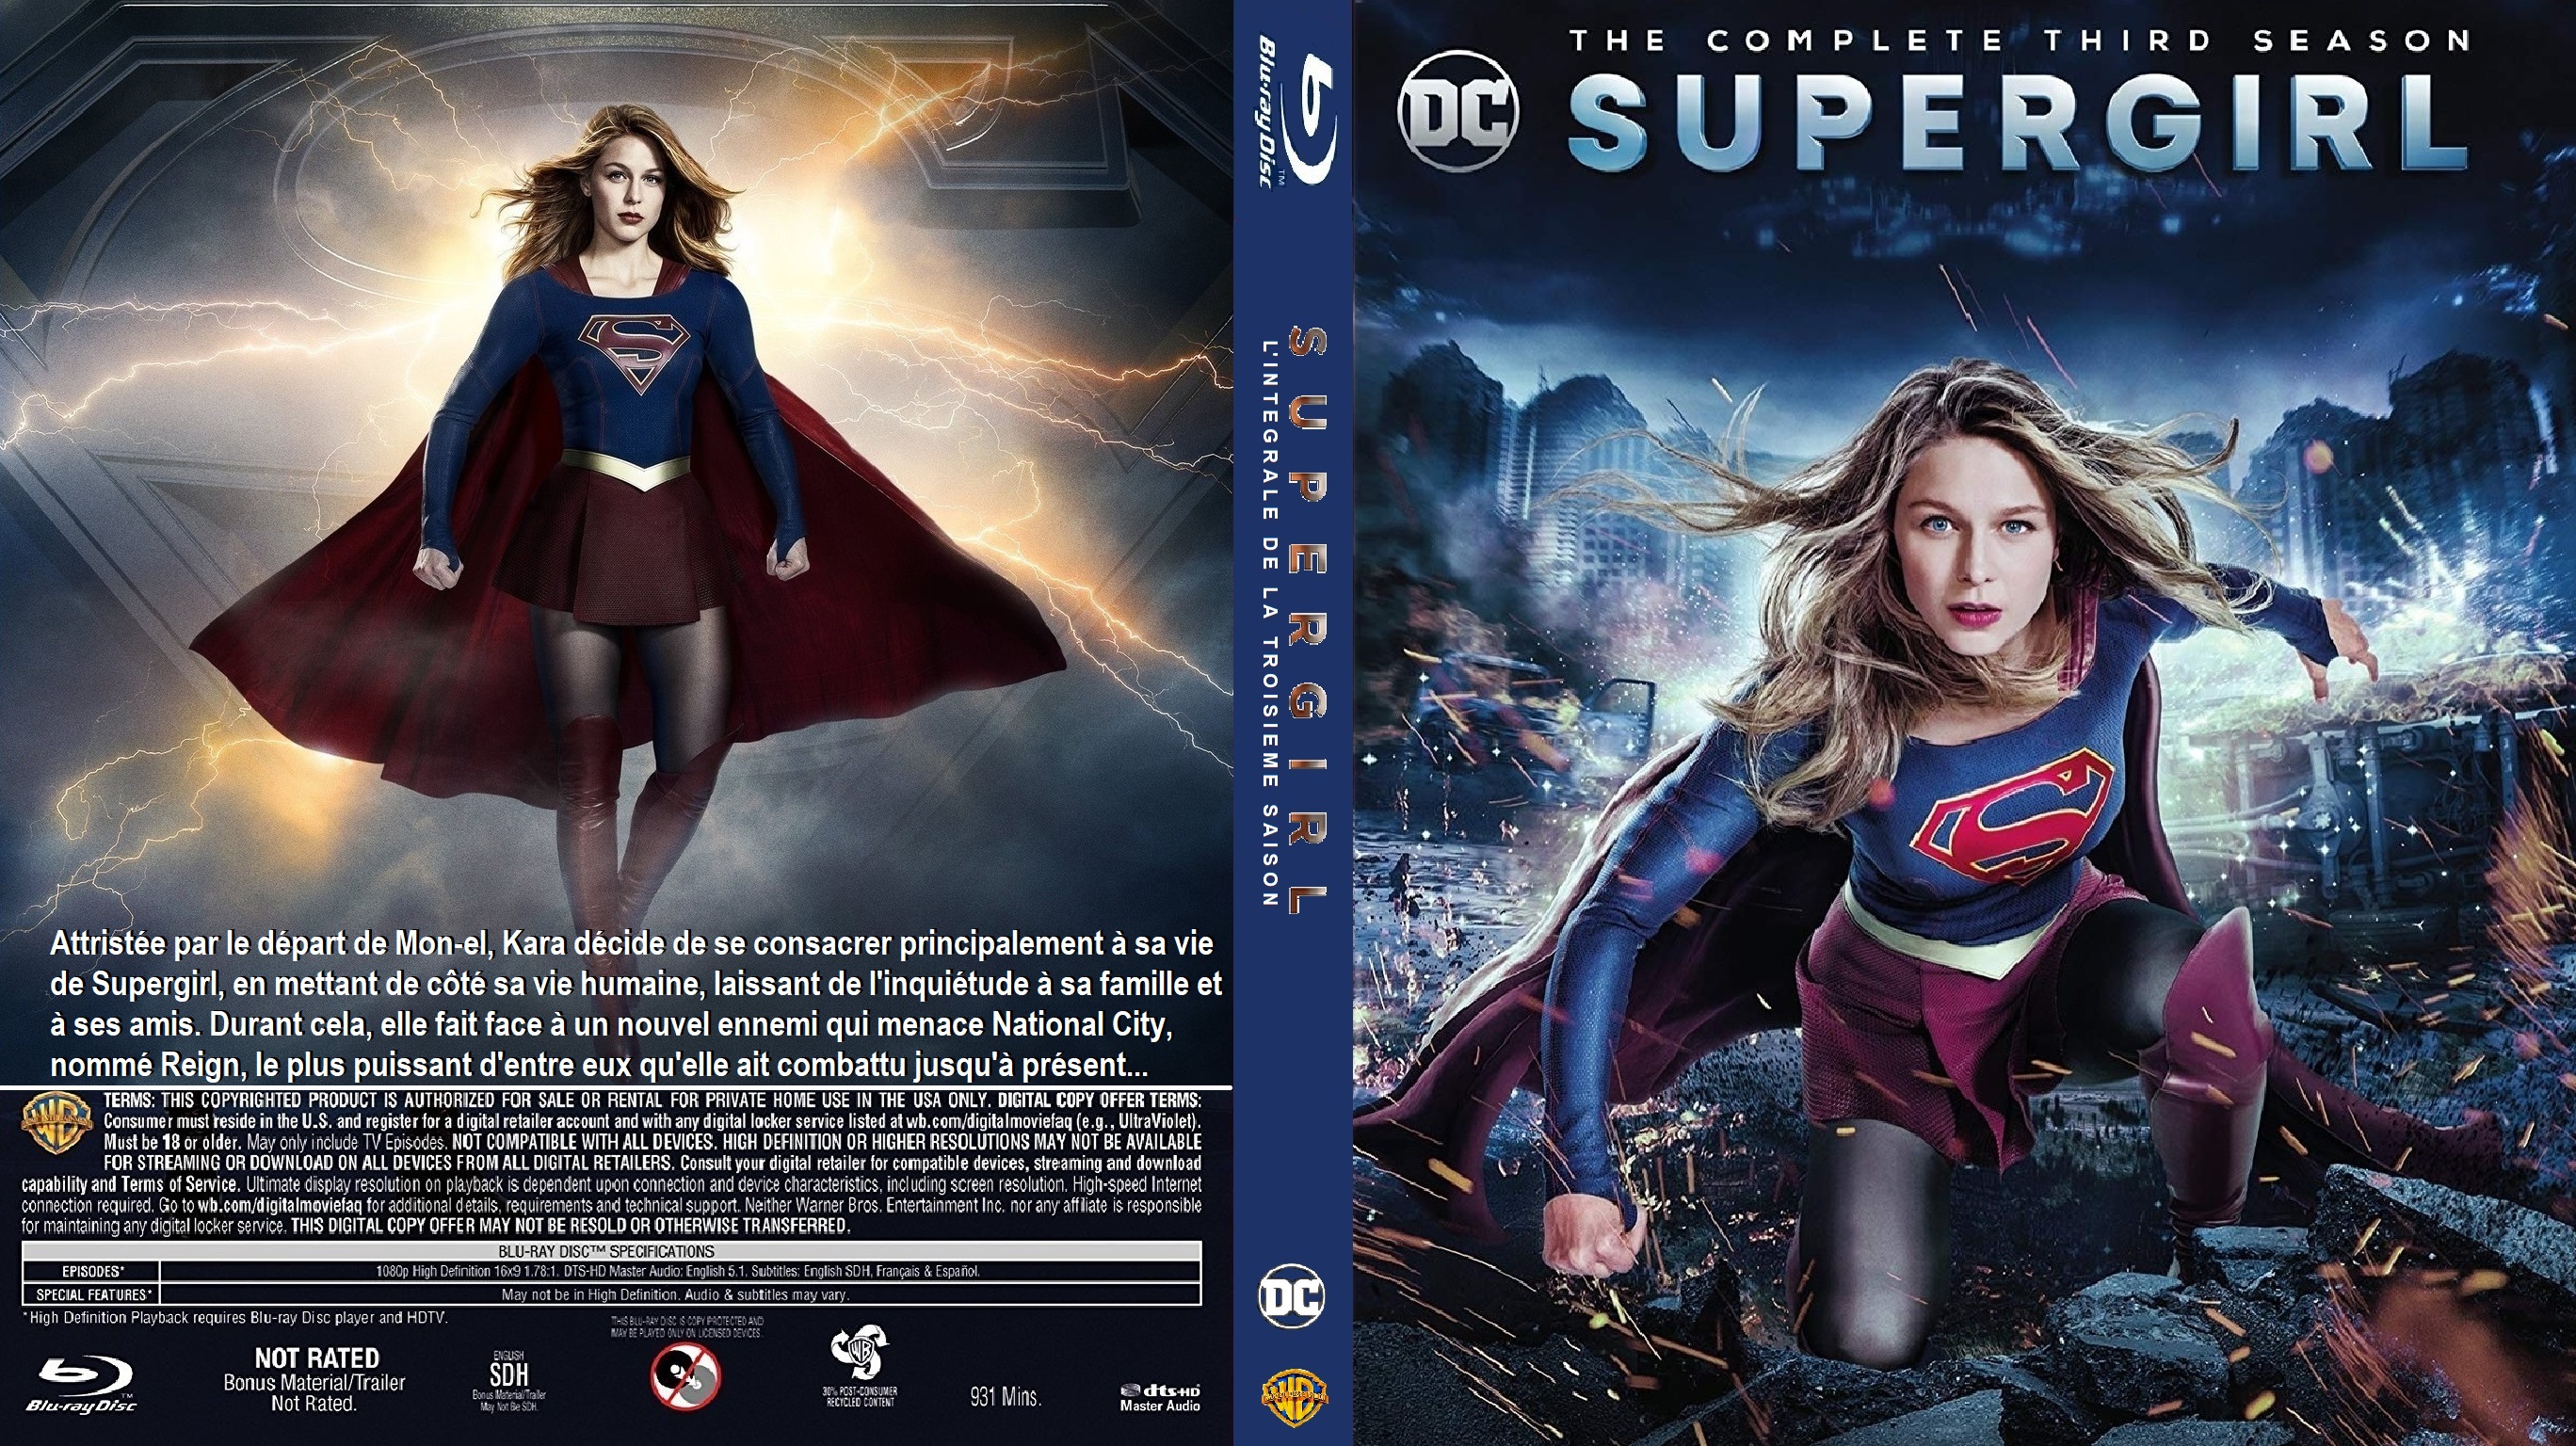 Jaquette DVD Supergirl saison 3 custom (BLU-RAY) v2